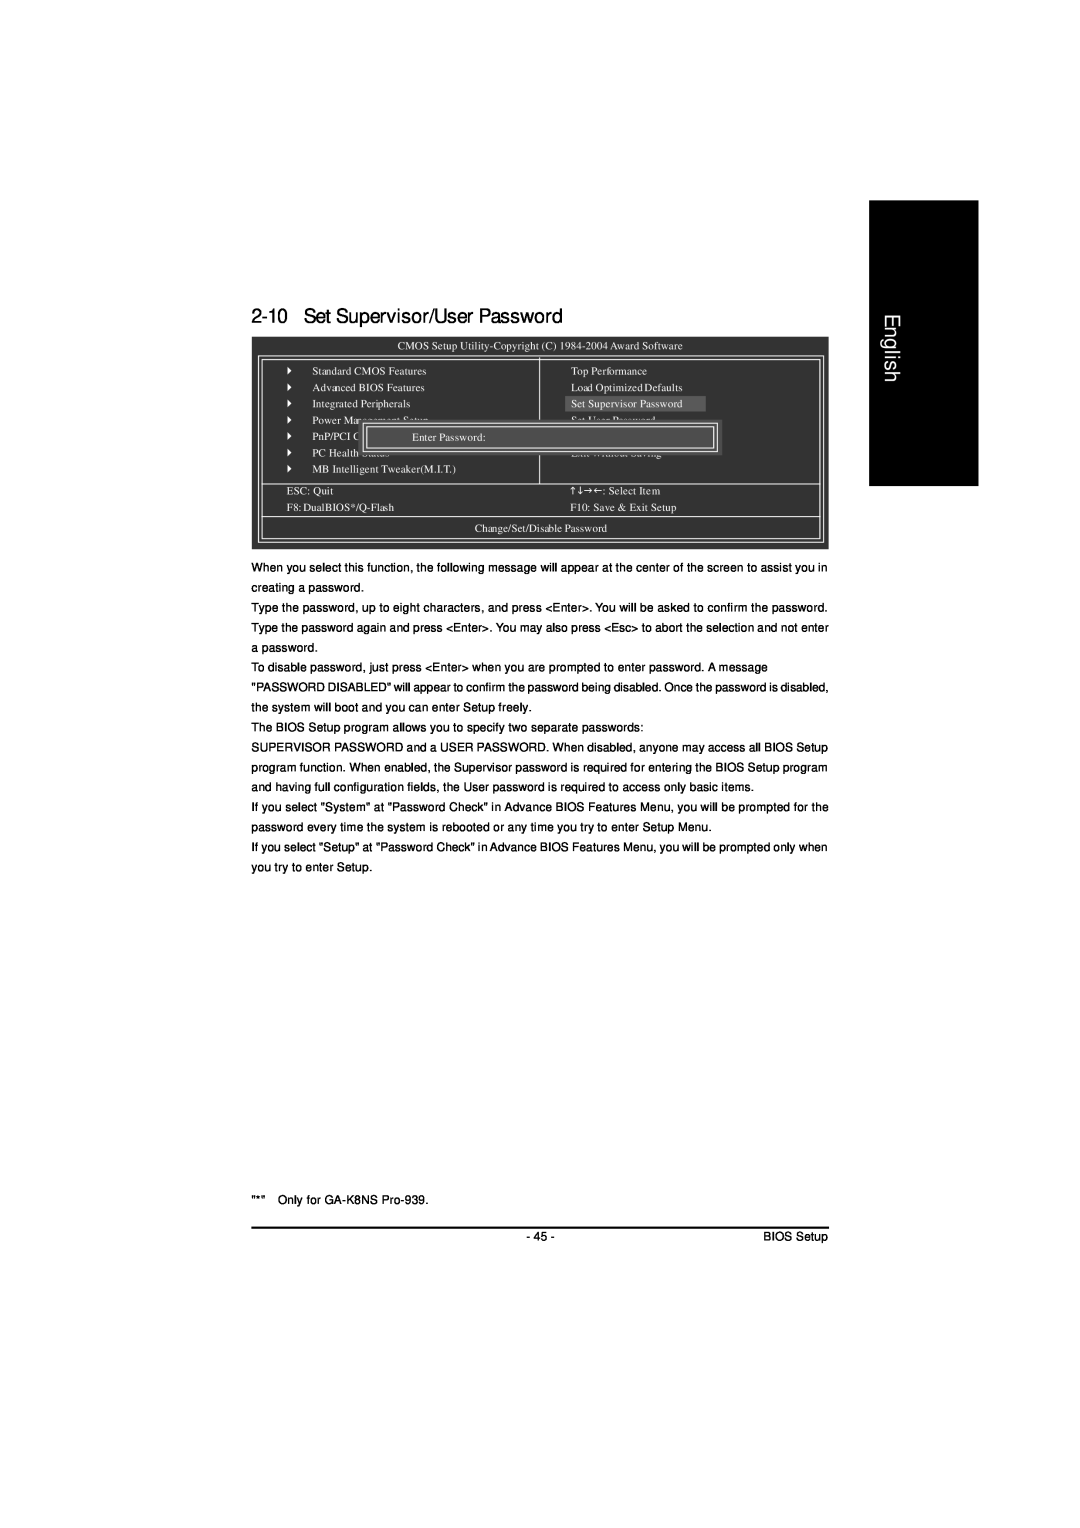 AMD GA-K8NS-939, GA-K8NS PRO-939 user manual 2-10, Set Supervisor/User Password, English 